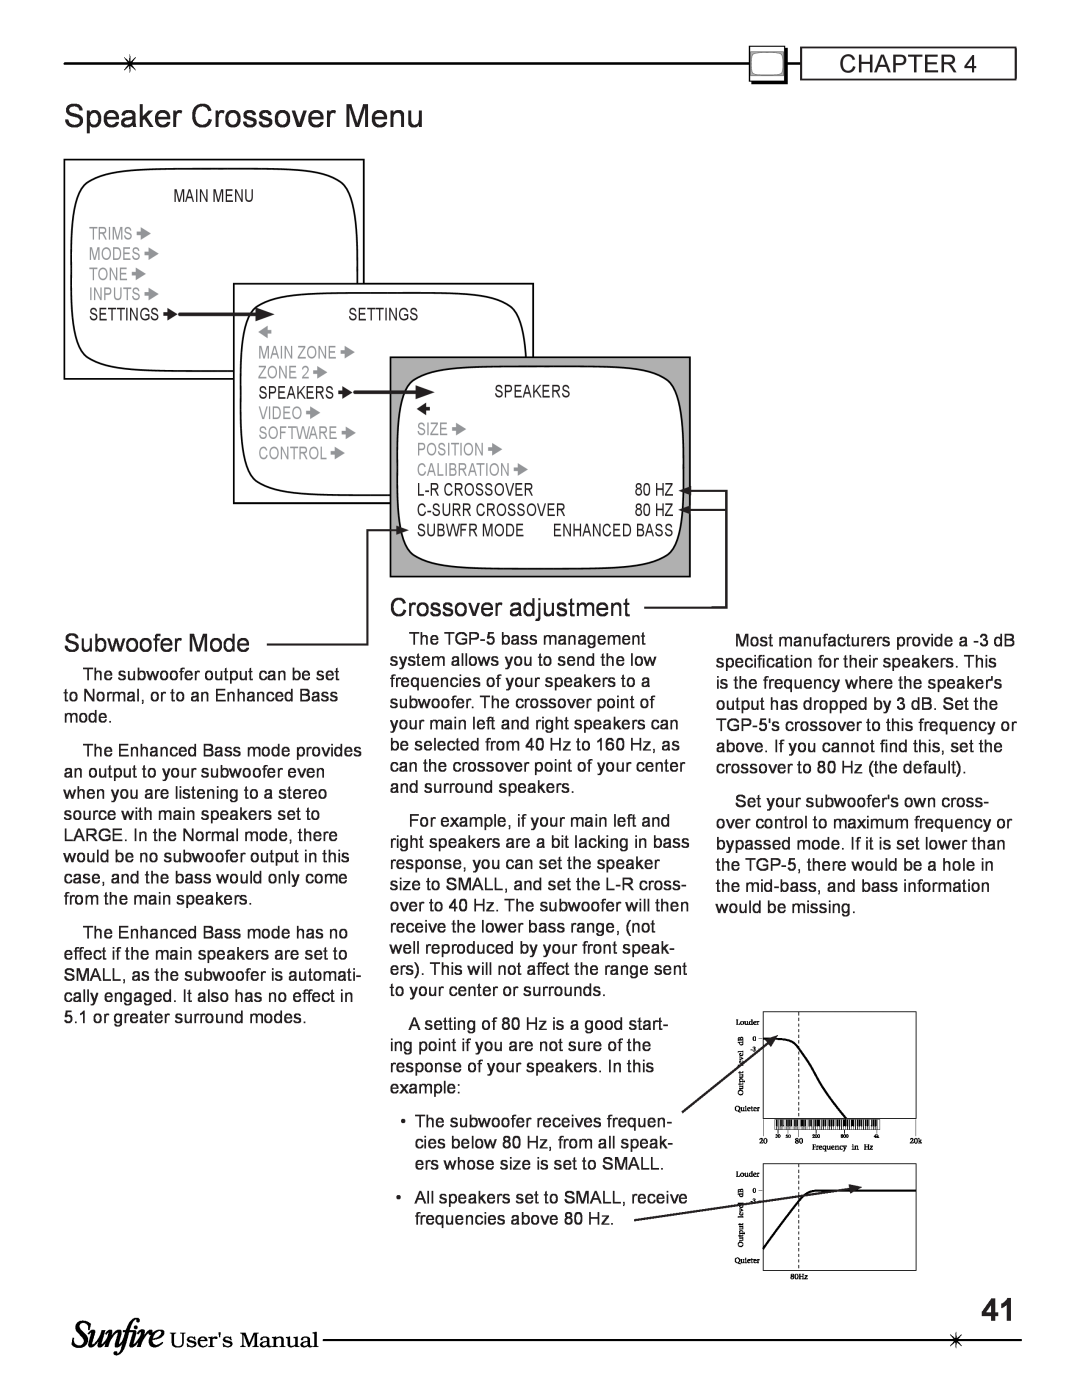 Sunfire TGP-5(E) manual Speaker Crossover Menu, Chapter, Crossover adjustment, Subwoofer Mode, Users Manual 